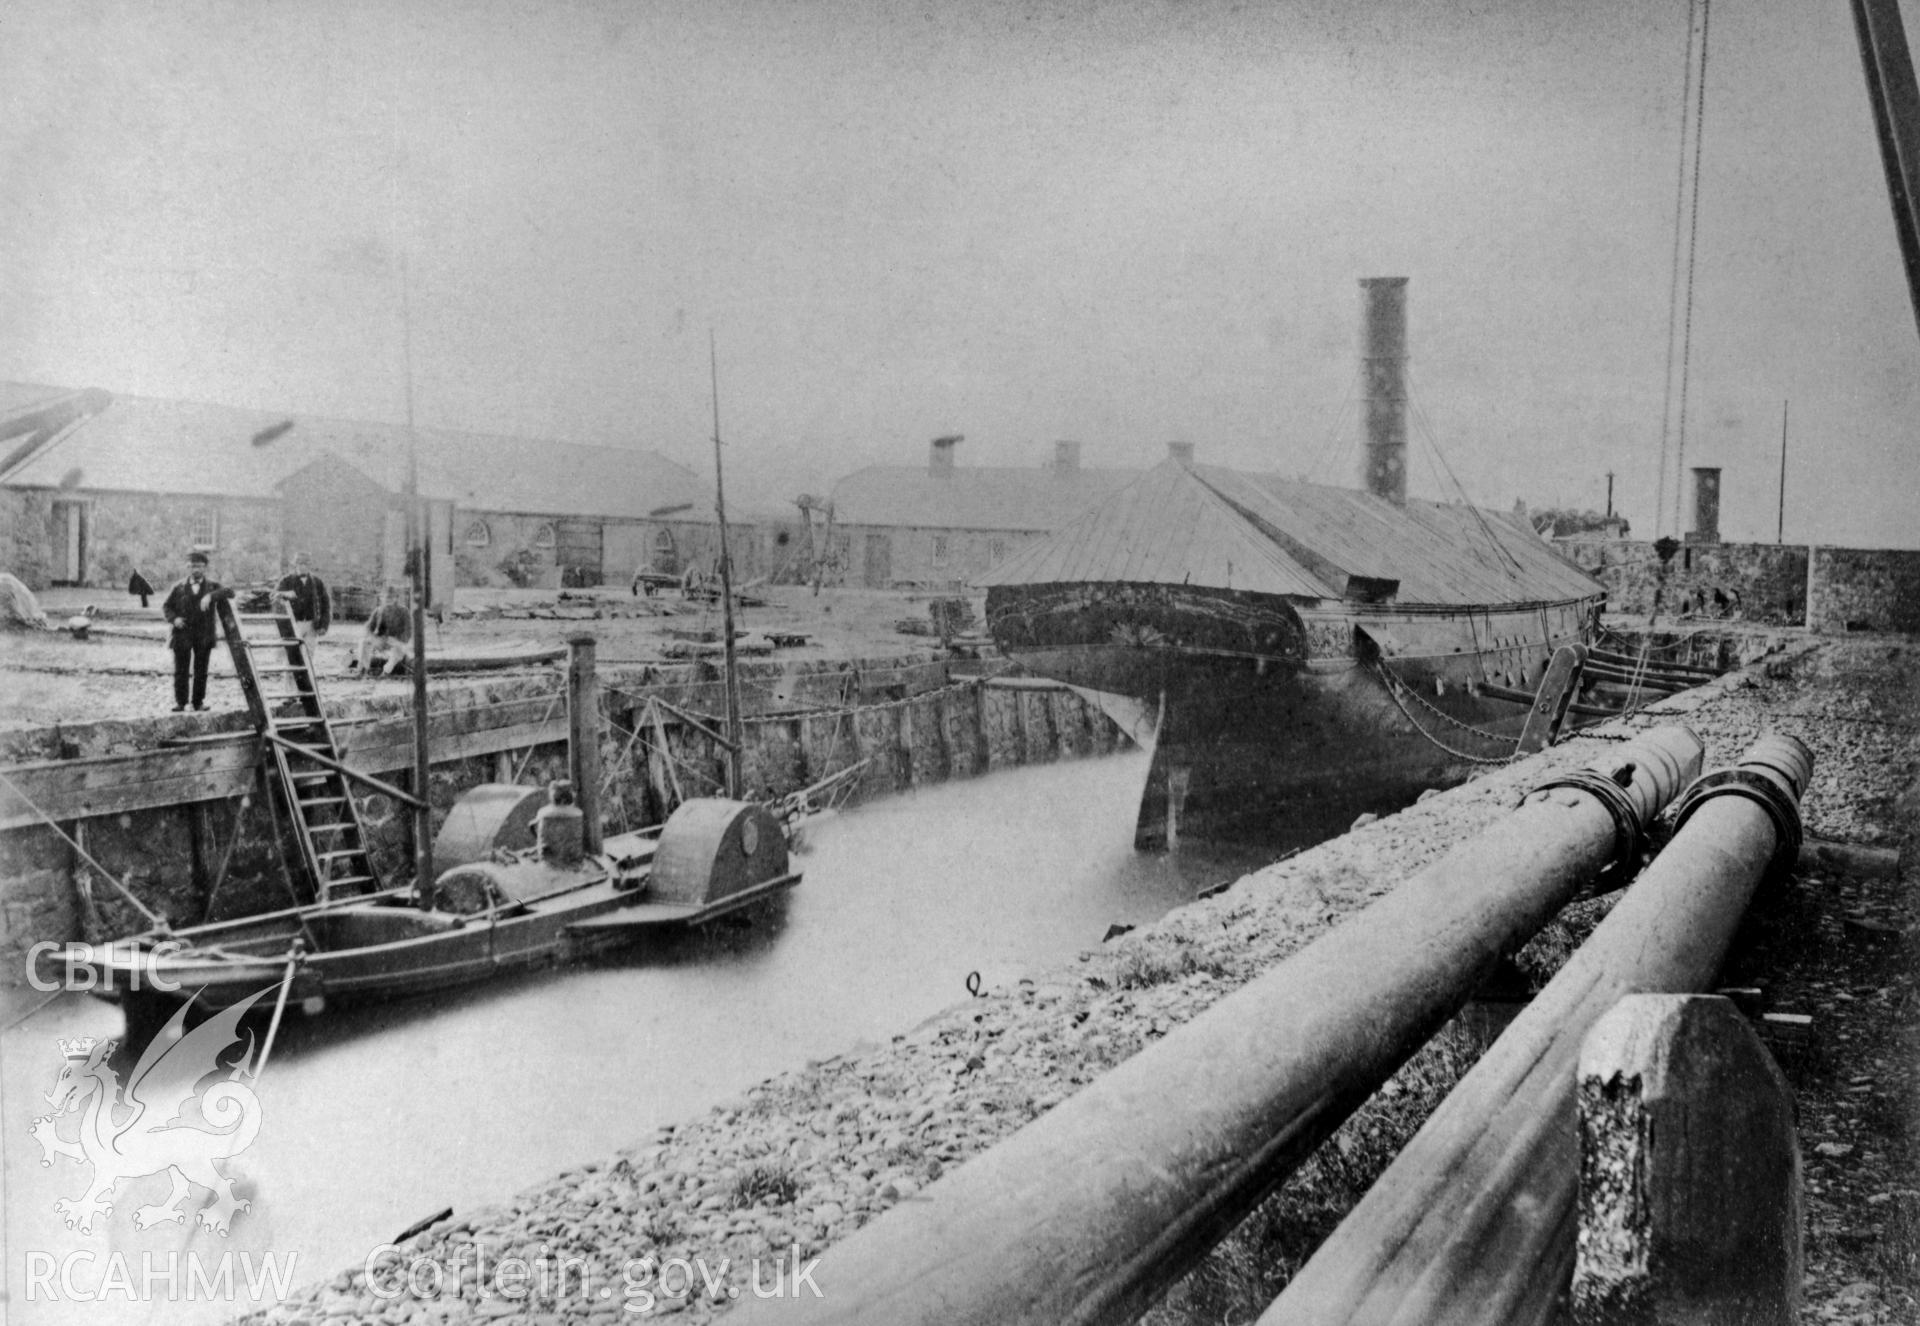 Fort Belan Dockyard with paddletug and steamship.